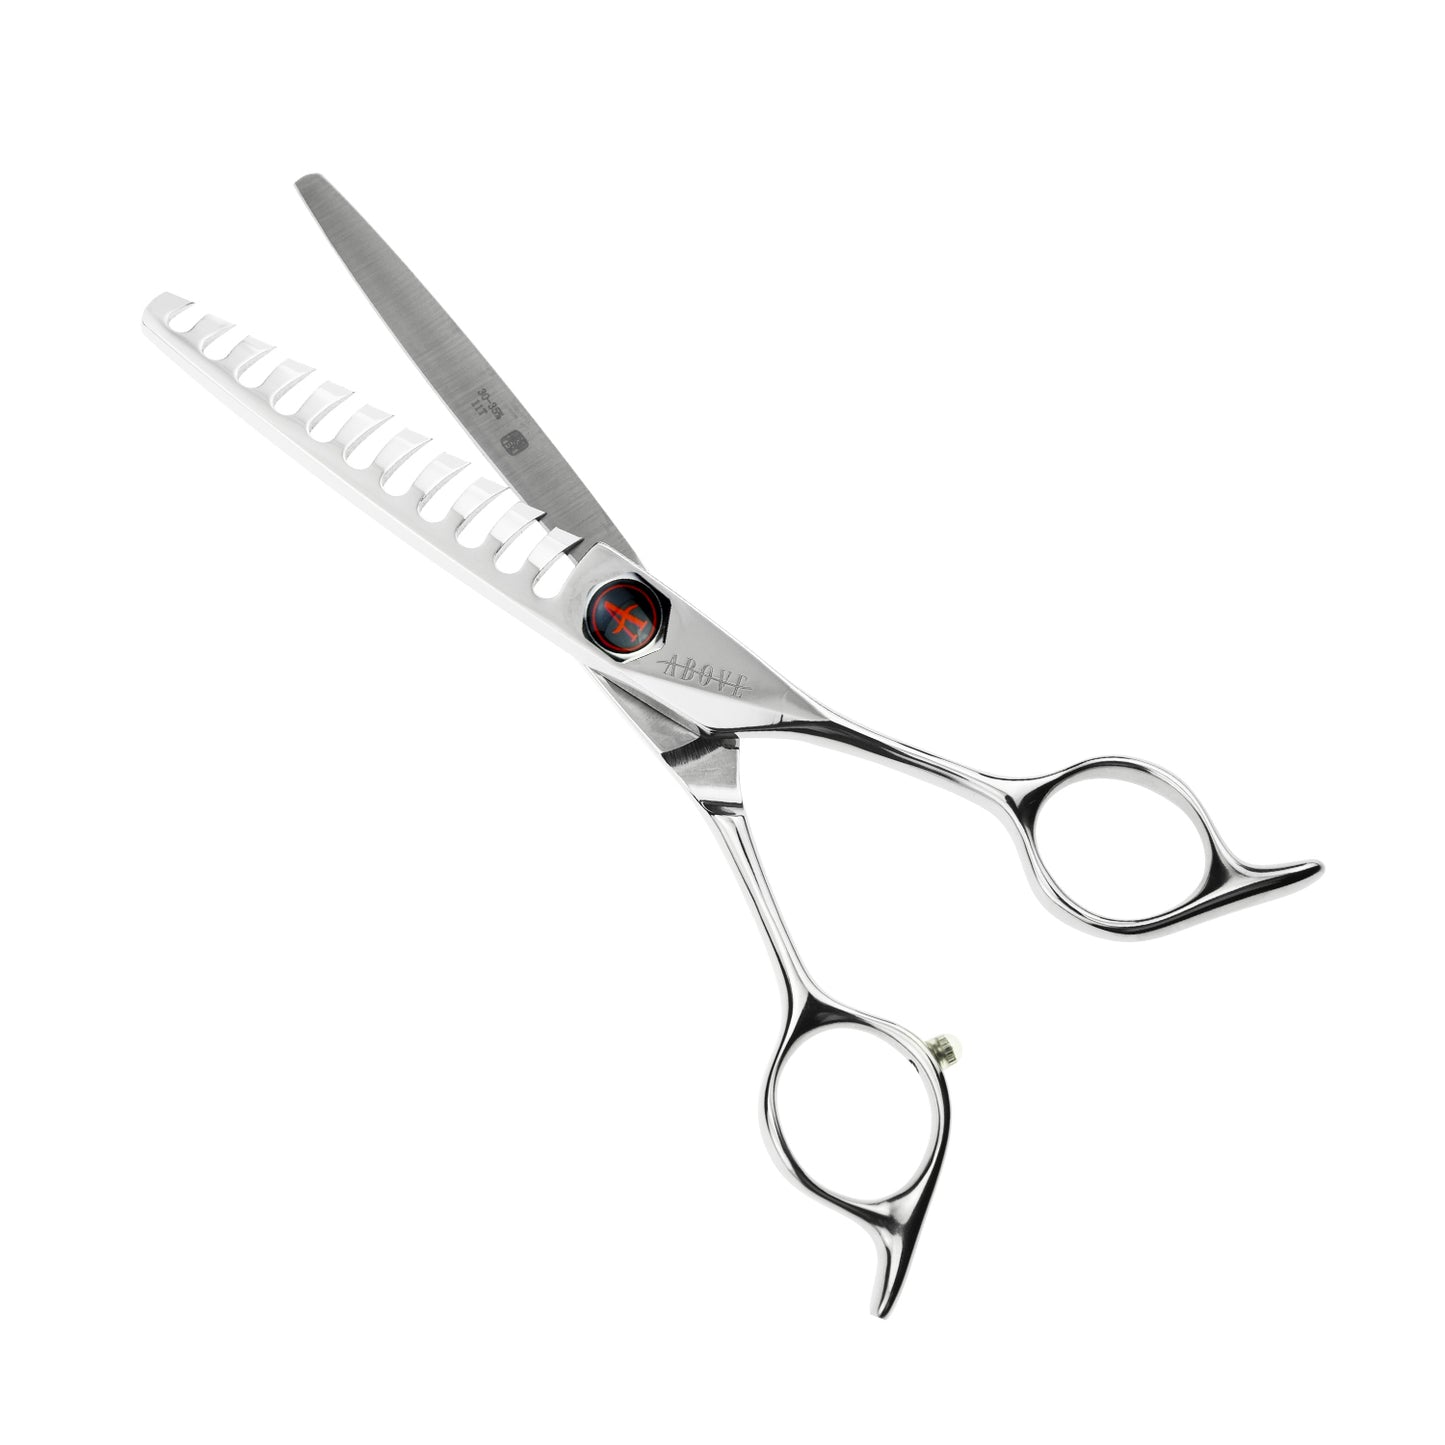 Above Flipper 11T Texturizing Hair Cutting Shears – 6.0 (#20156011)